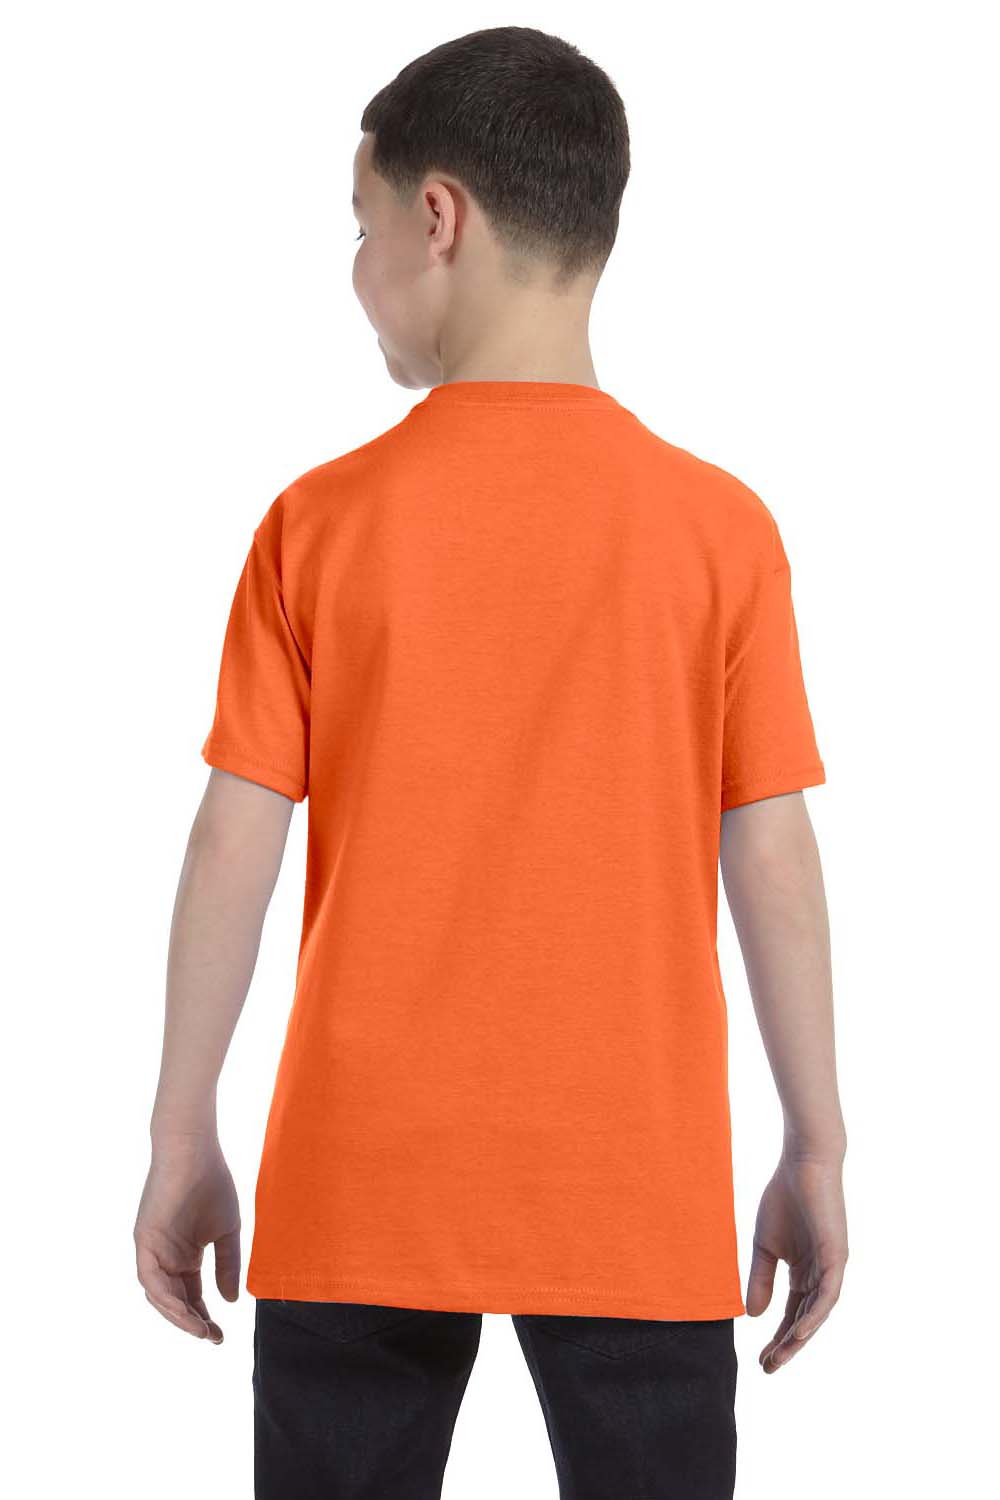 Jerzees 29B Youth Dri-Power Moisture Wicking Short Sleeve Crewneck T-Shirt Tennessee Orange Back